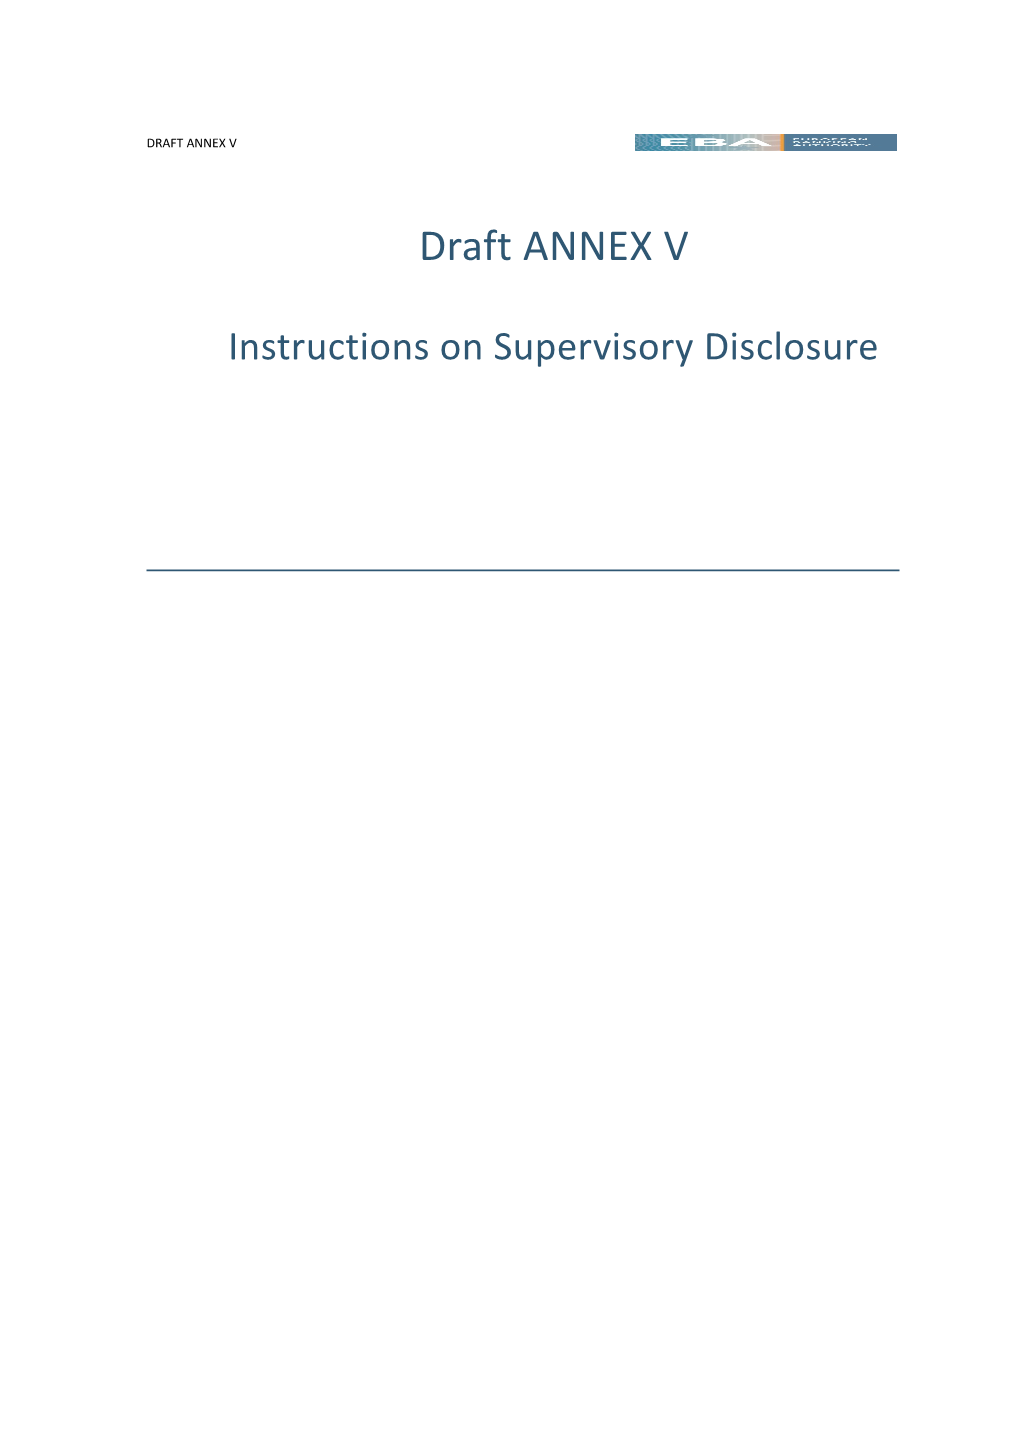 EBA BS Xx Draft Annex V (Draft CP on Amending ITS on Supervisory Disclosure) - Rev1